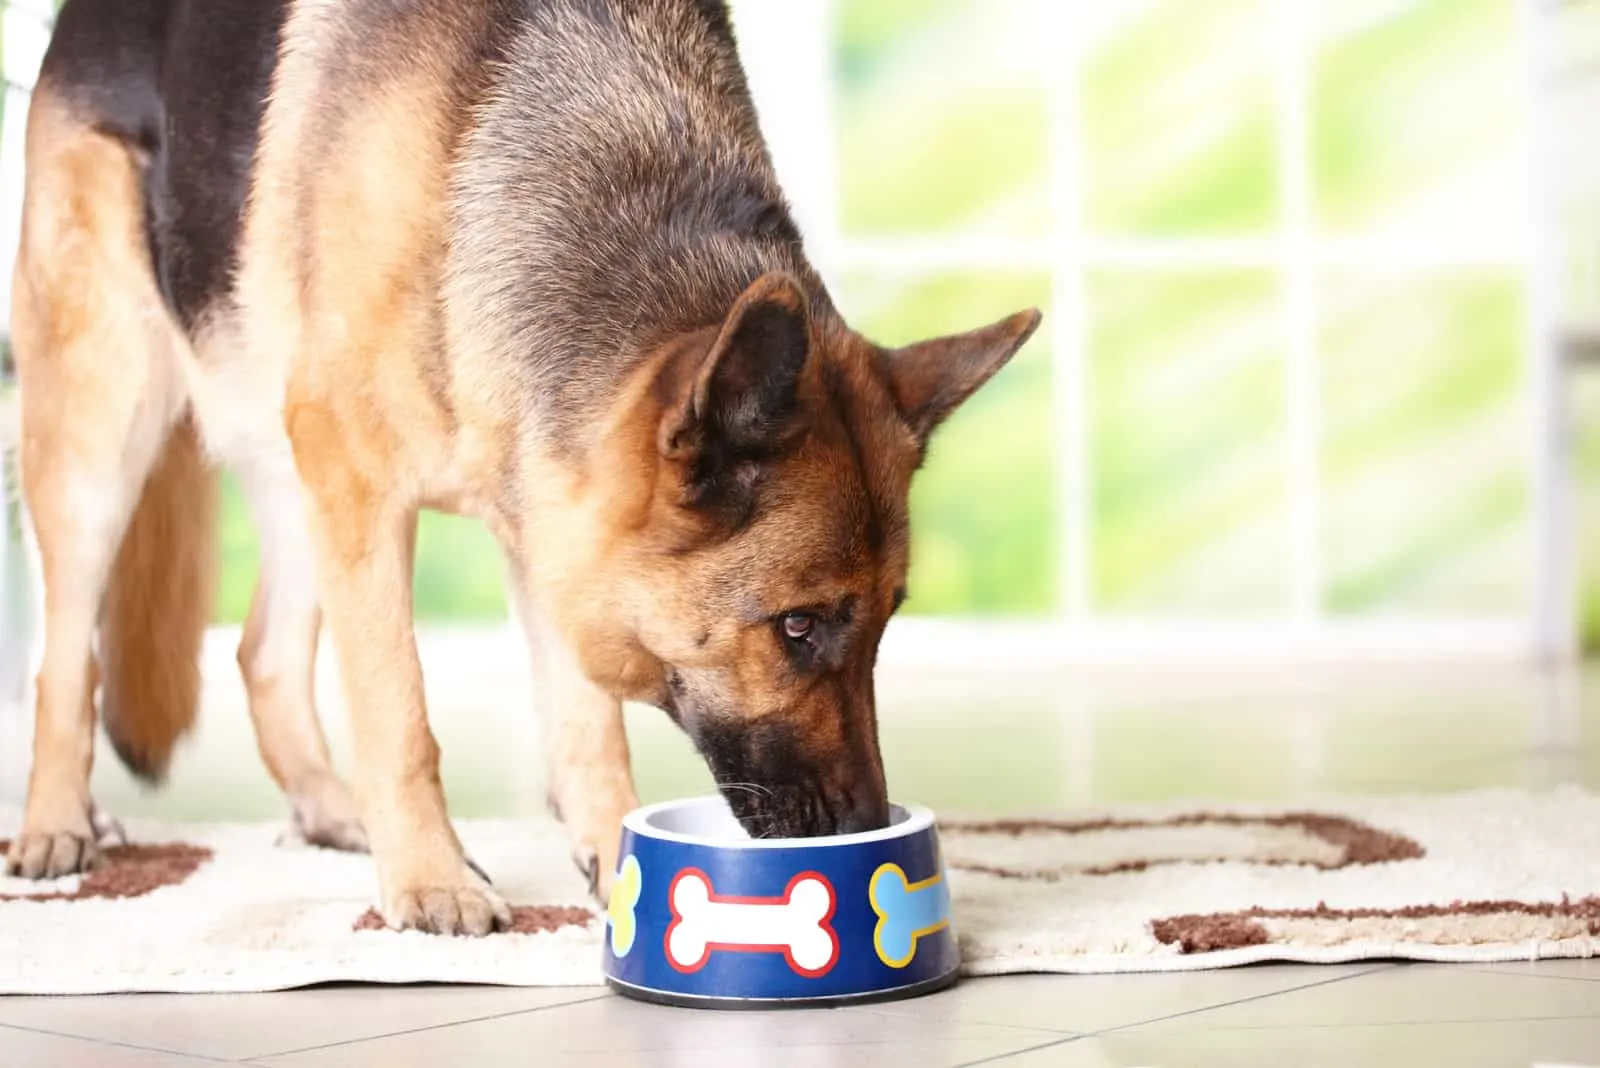 Dog German shepherd eating or drinking from bowl